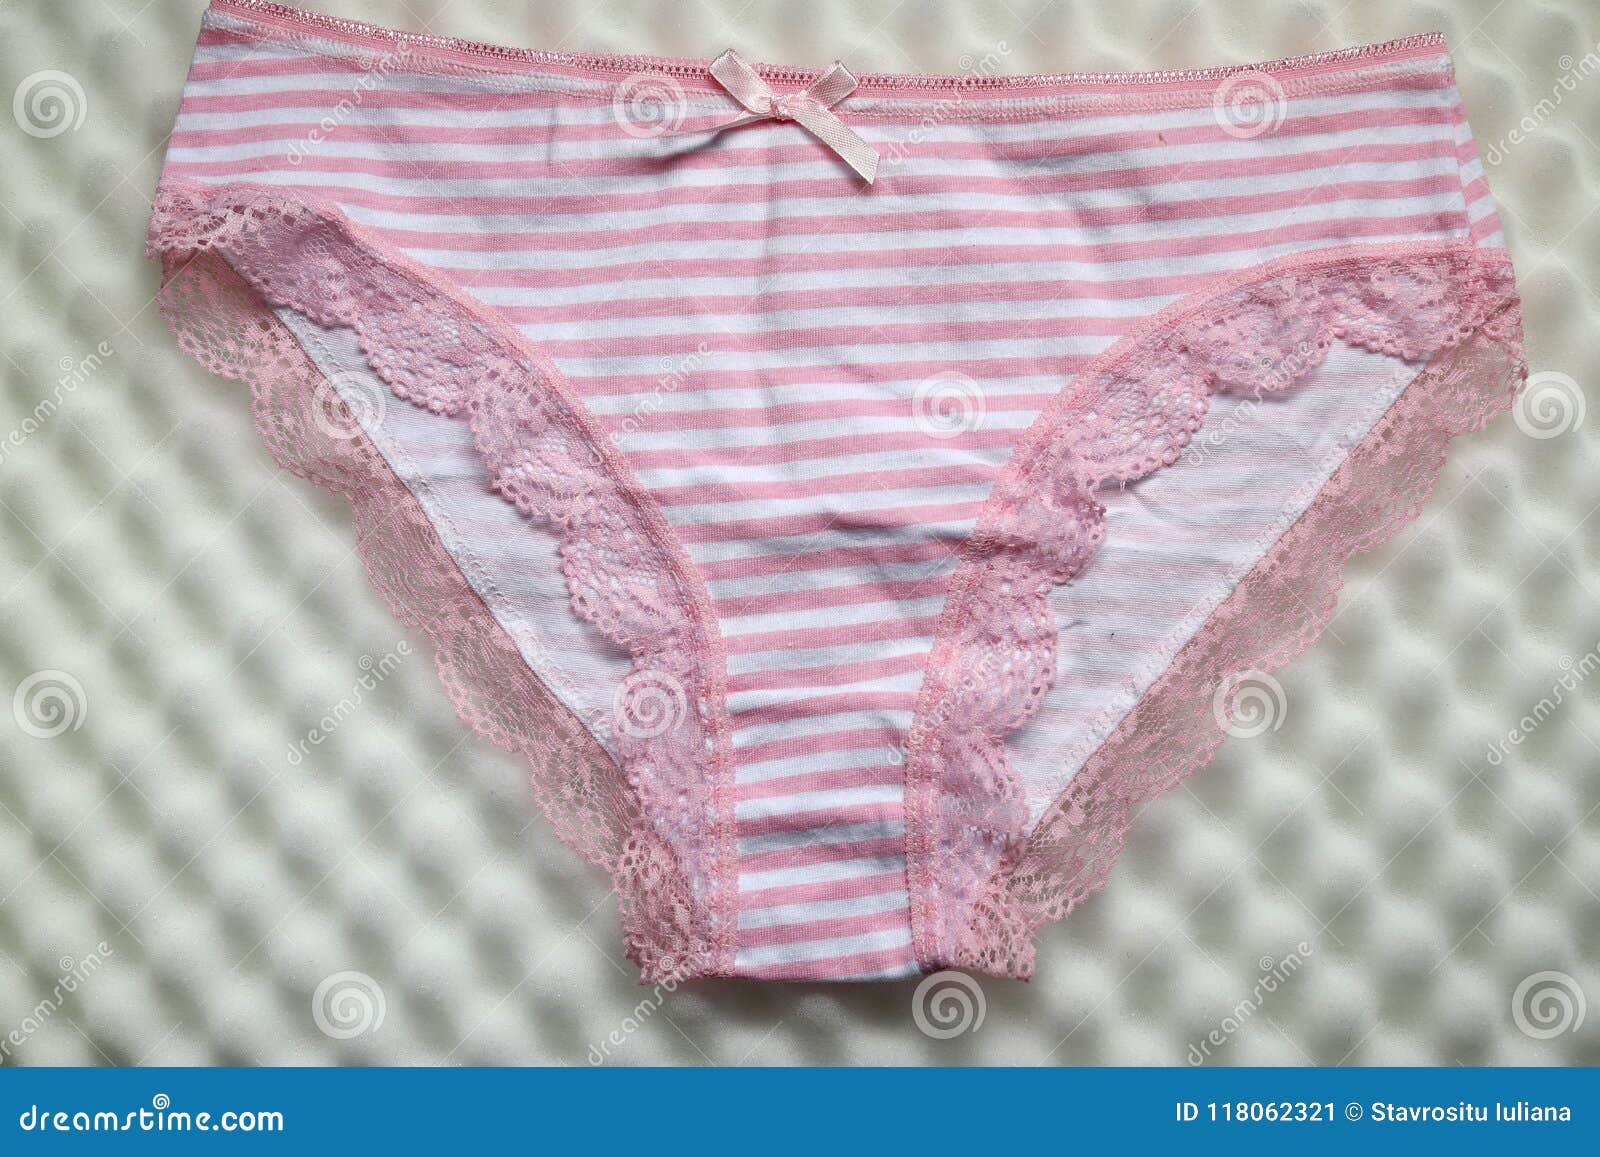 pink n white panties